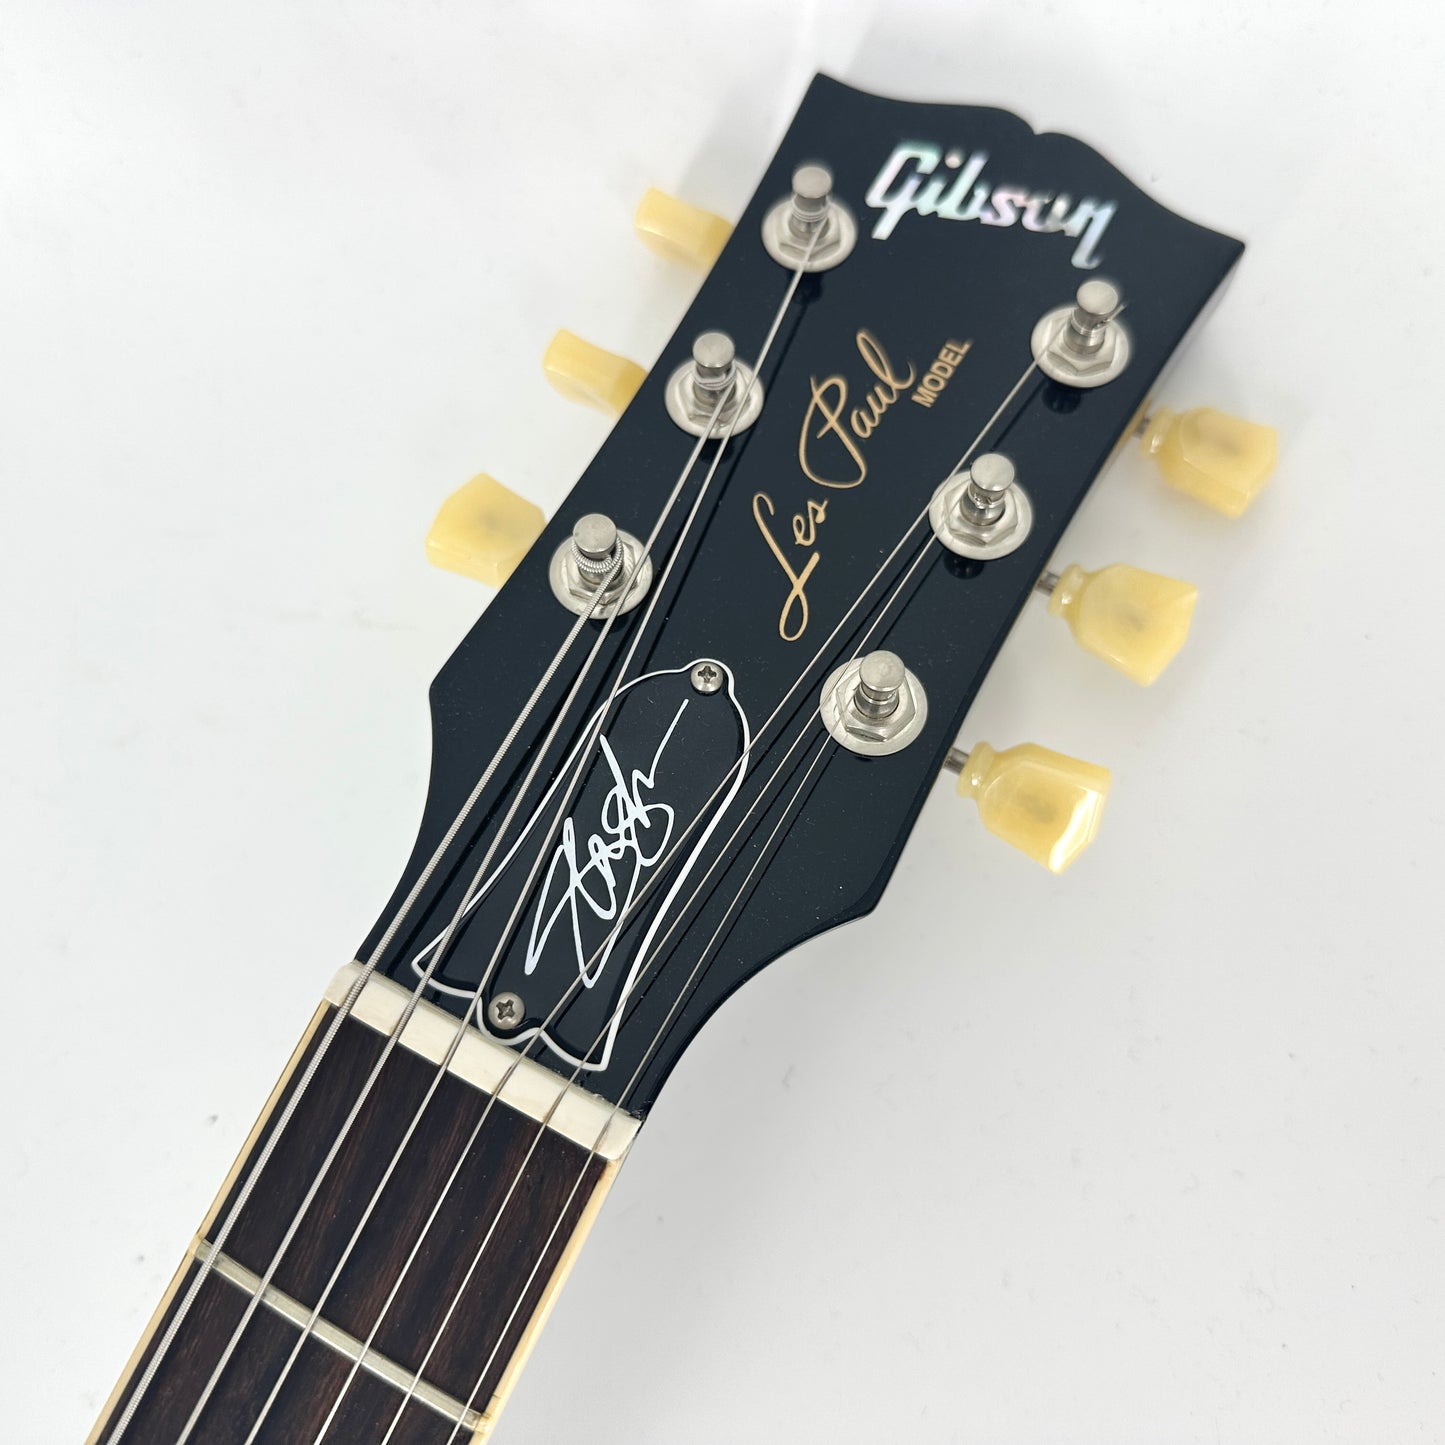 2021 Gibson Slash Signature Limited Edition Les Paul Standard – Anaconda Burst